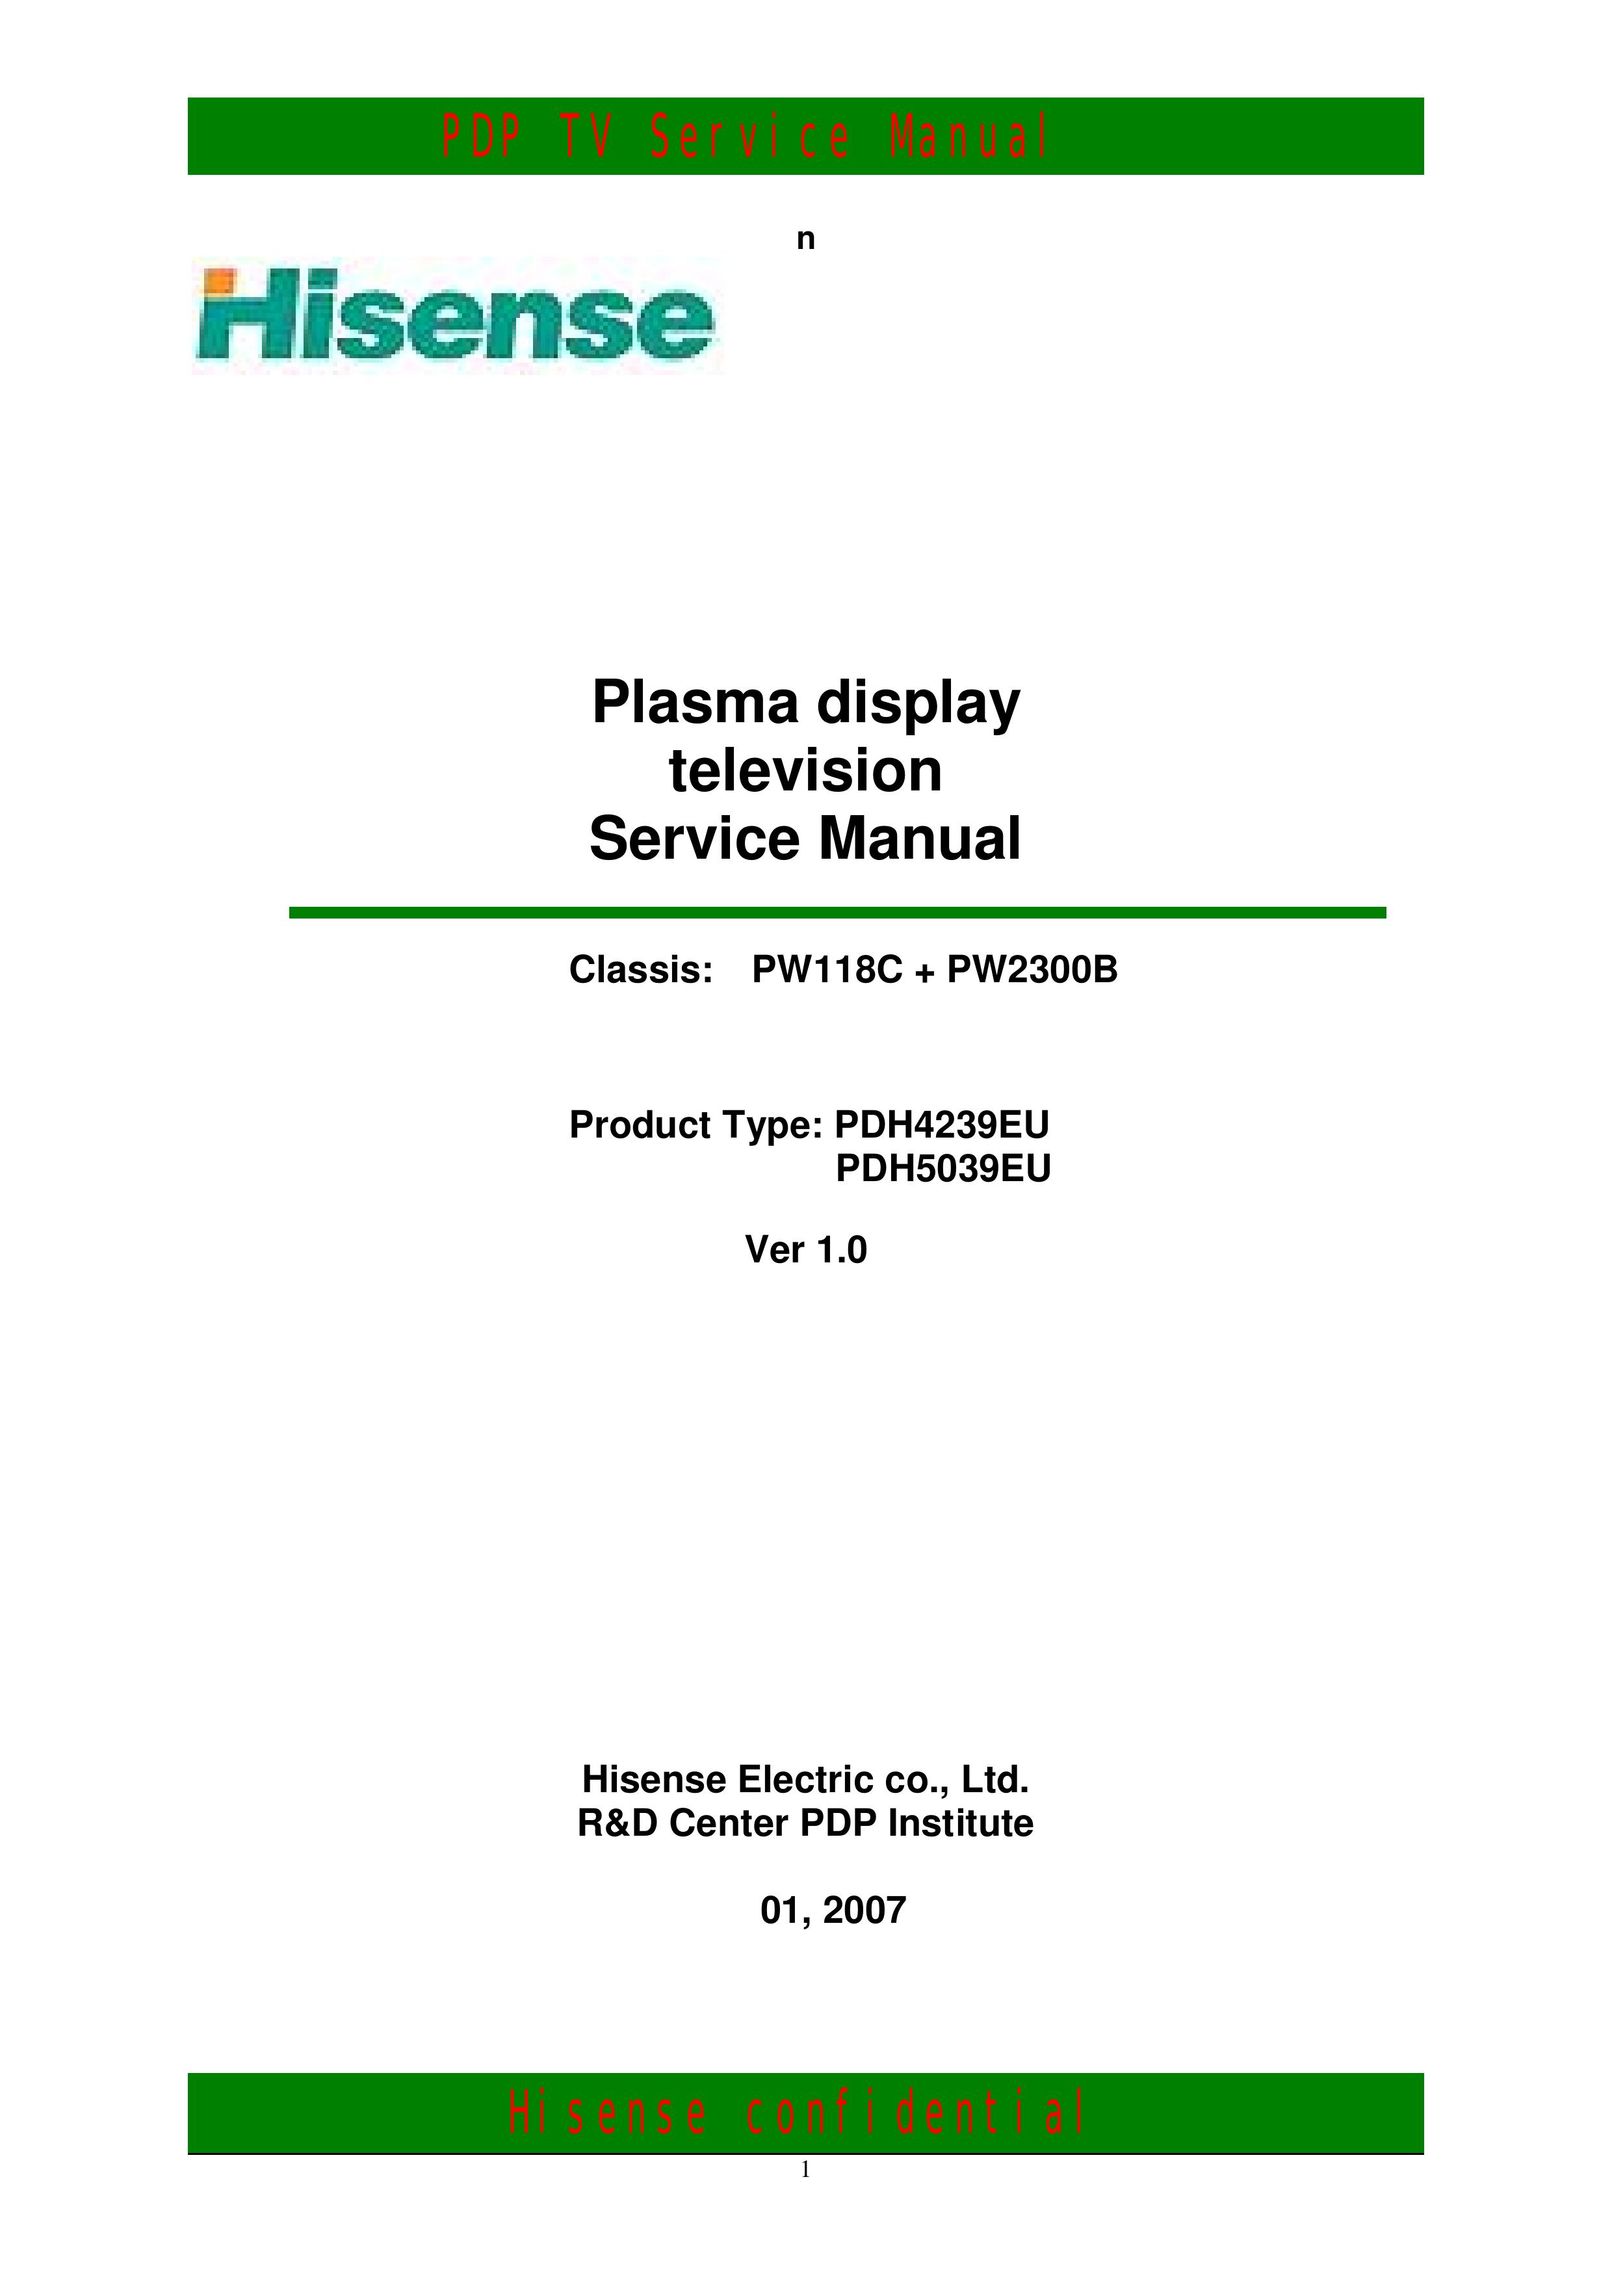 Hisense PDH5039EU Flat Panel Television User Manual